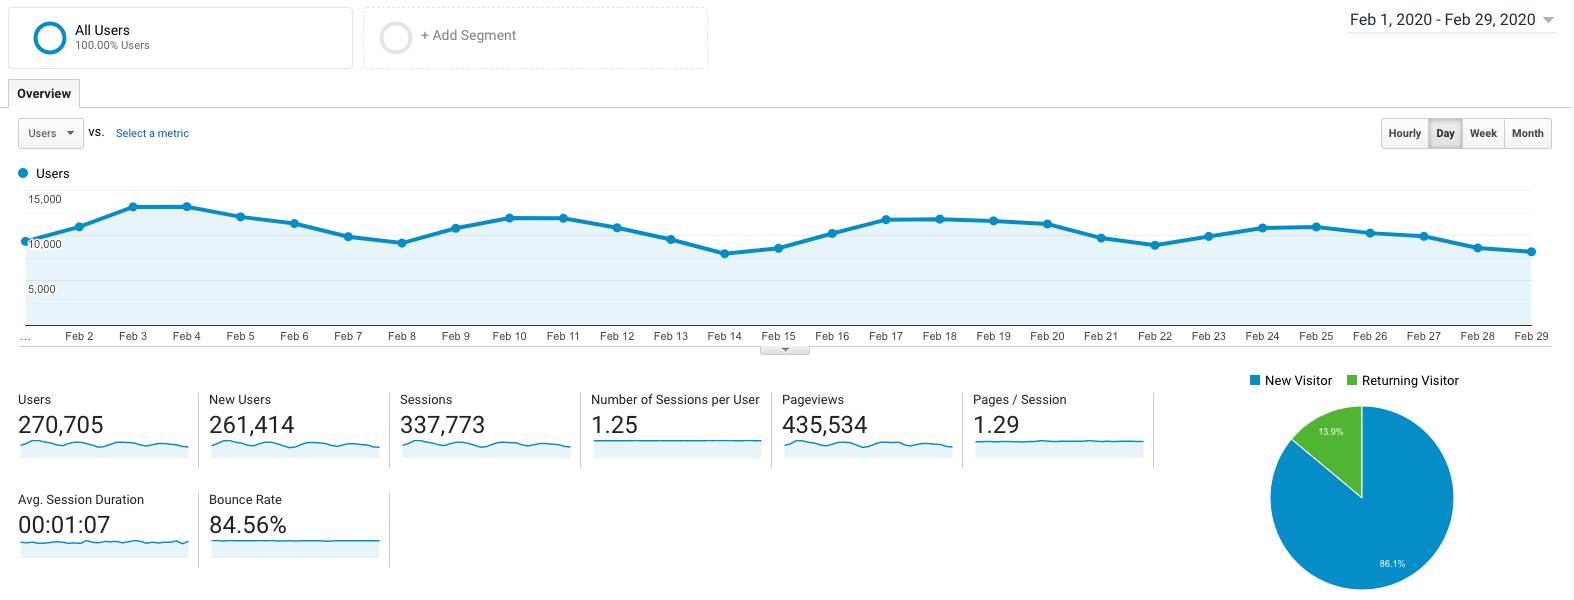 Ryan Robinson February 2020 Blog Income Report Google Analytics Screenshot of Blog Traffic